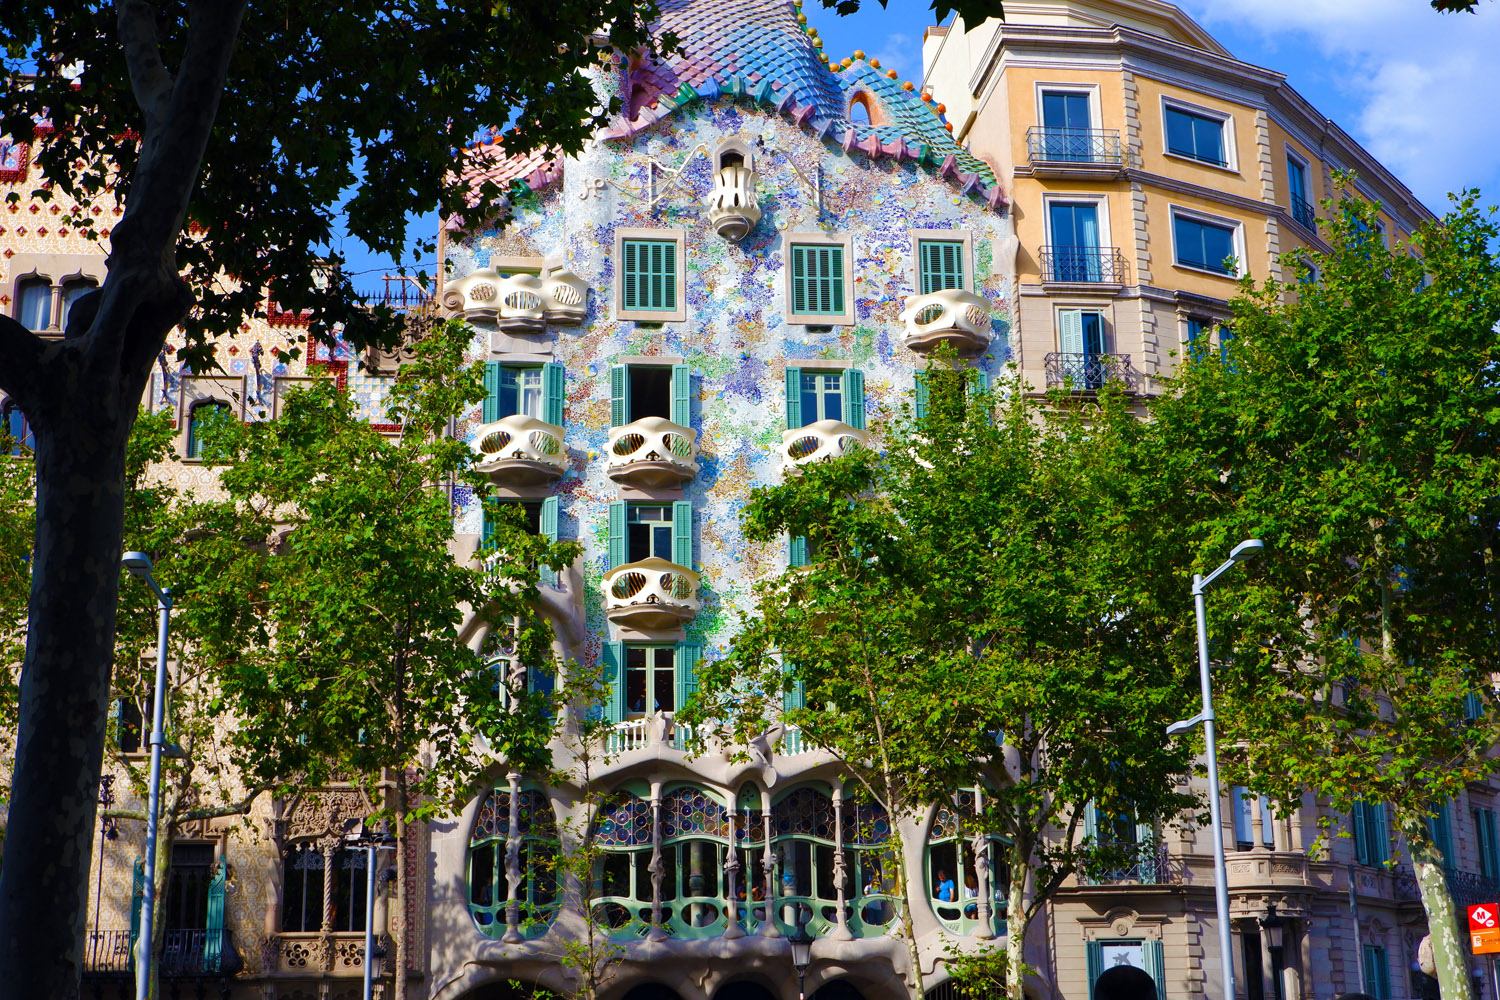 Casa Batlló Tour